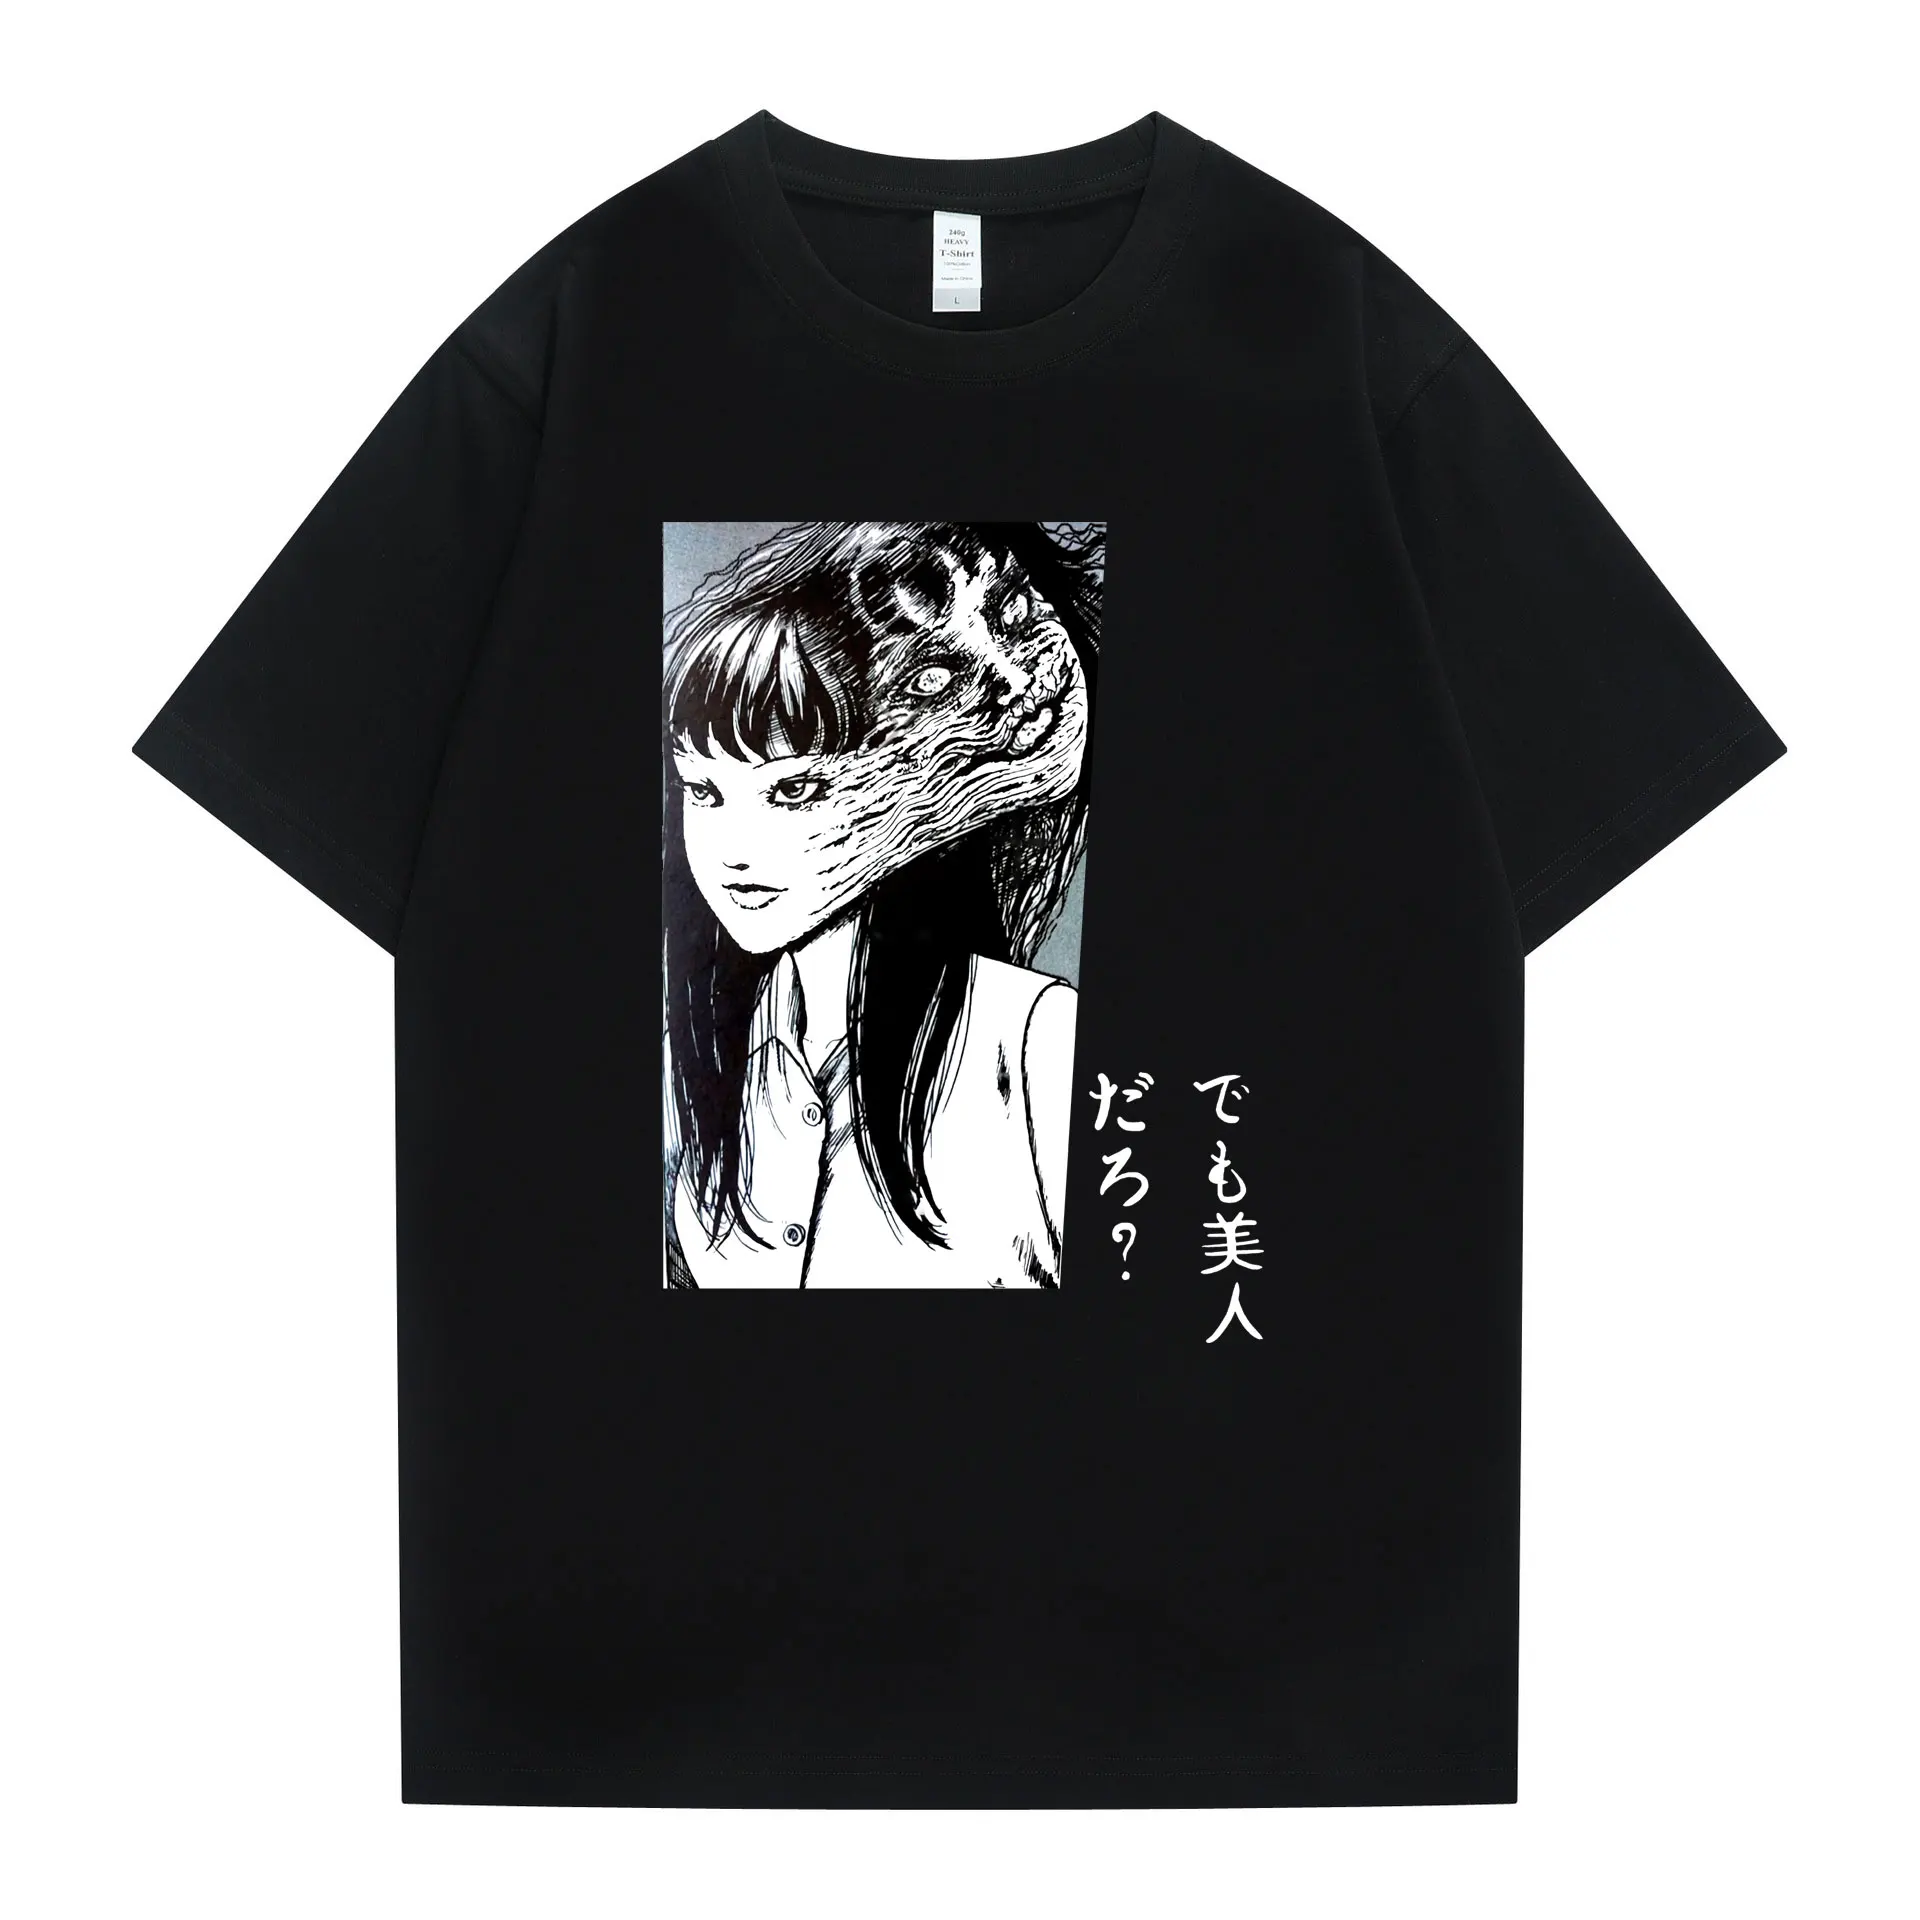 

Hot Sale Tomie Junji Ito Tshirts Mens Cotton T-shirt Short Sleeve Horror Uzumaki Evangelion Akira Shintaro Kago Manga Tee Tops